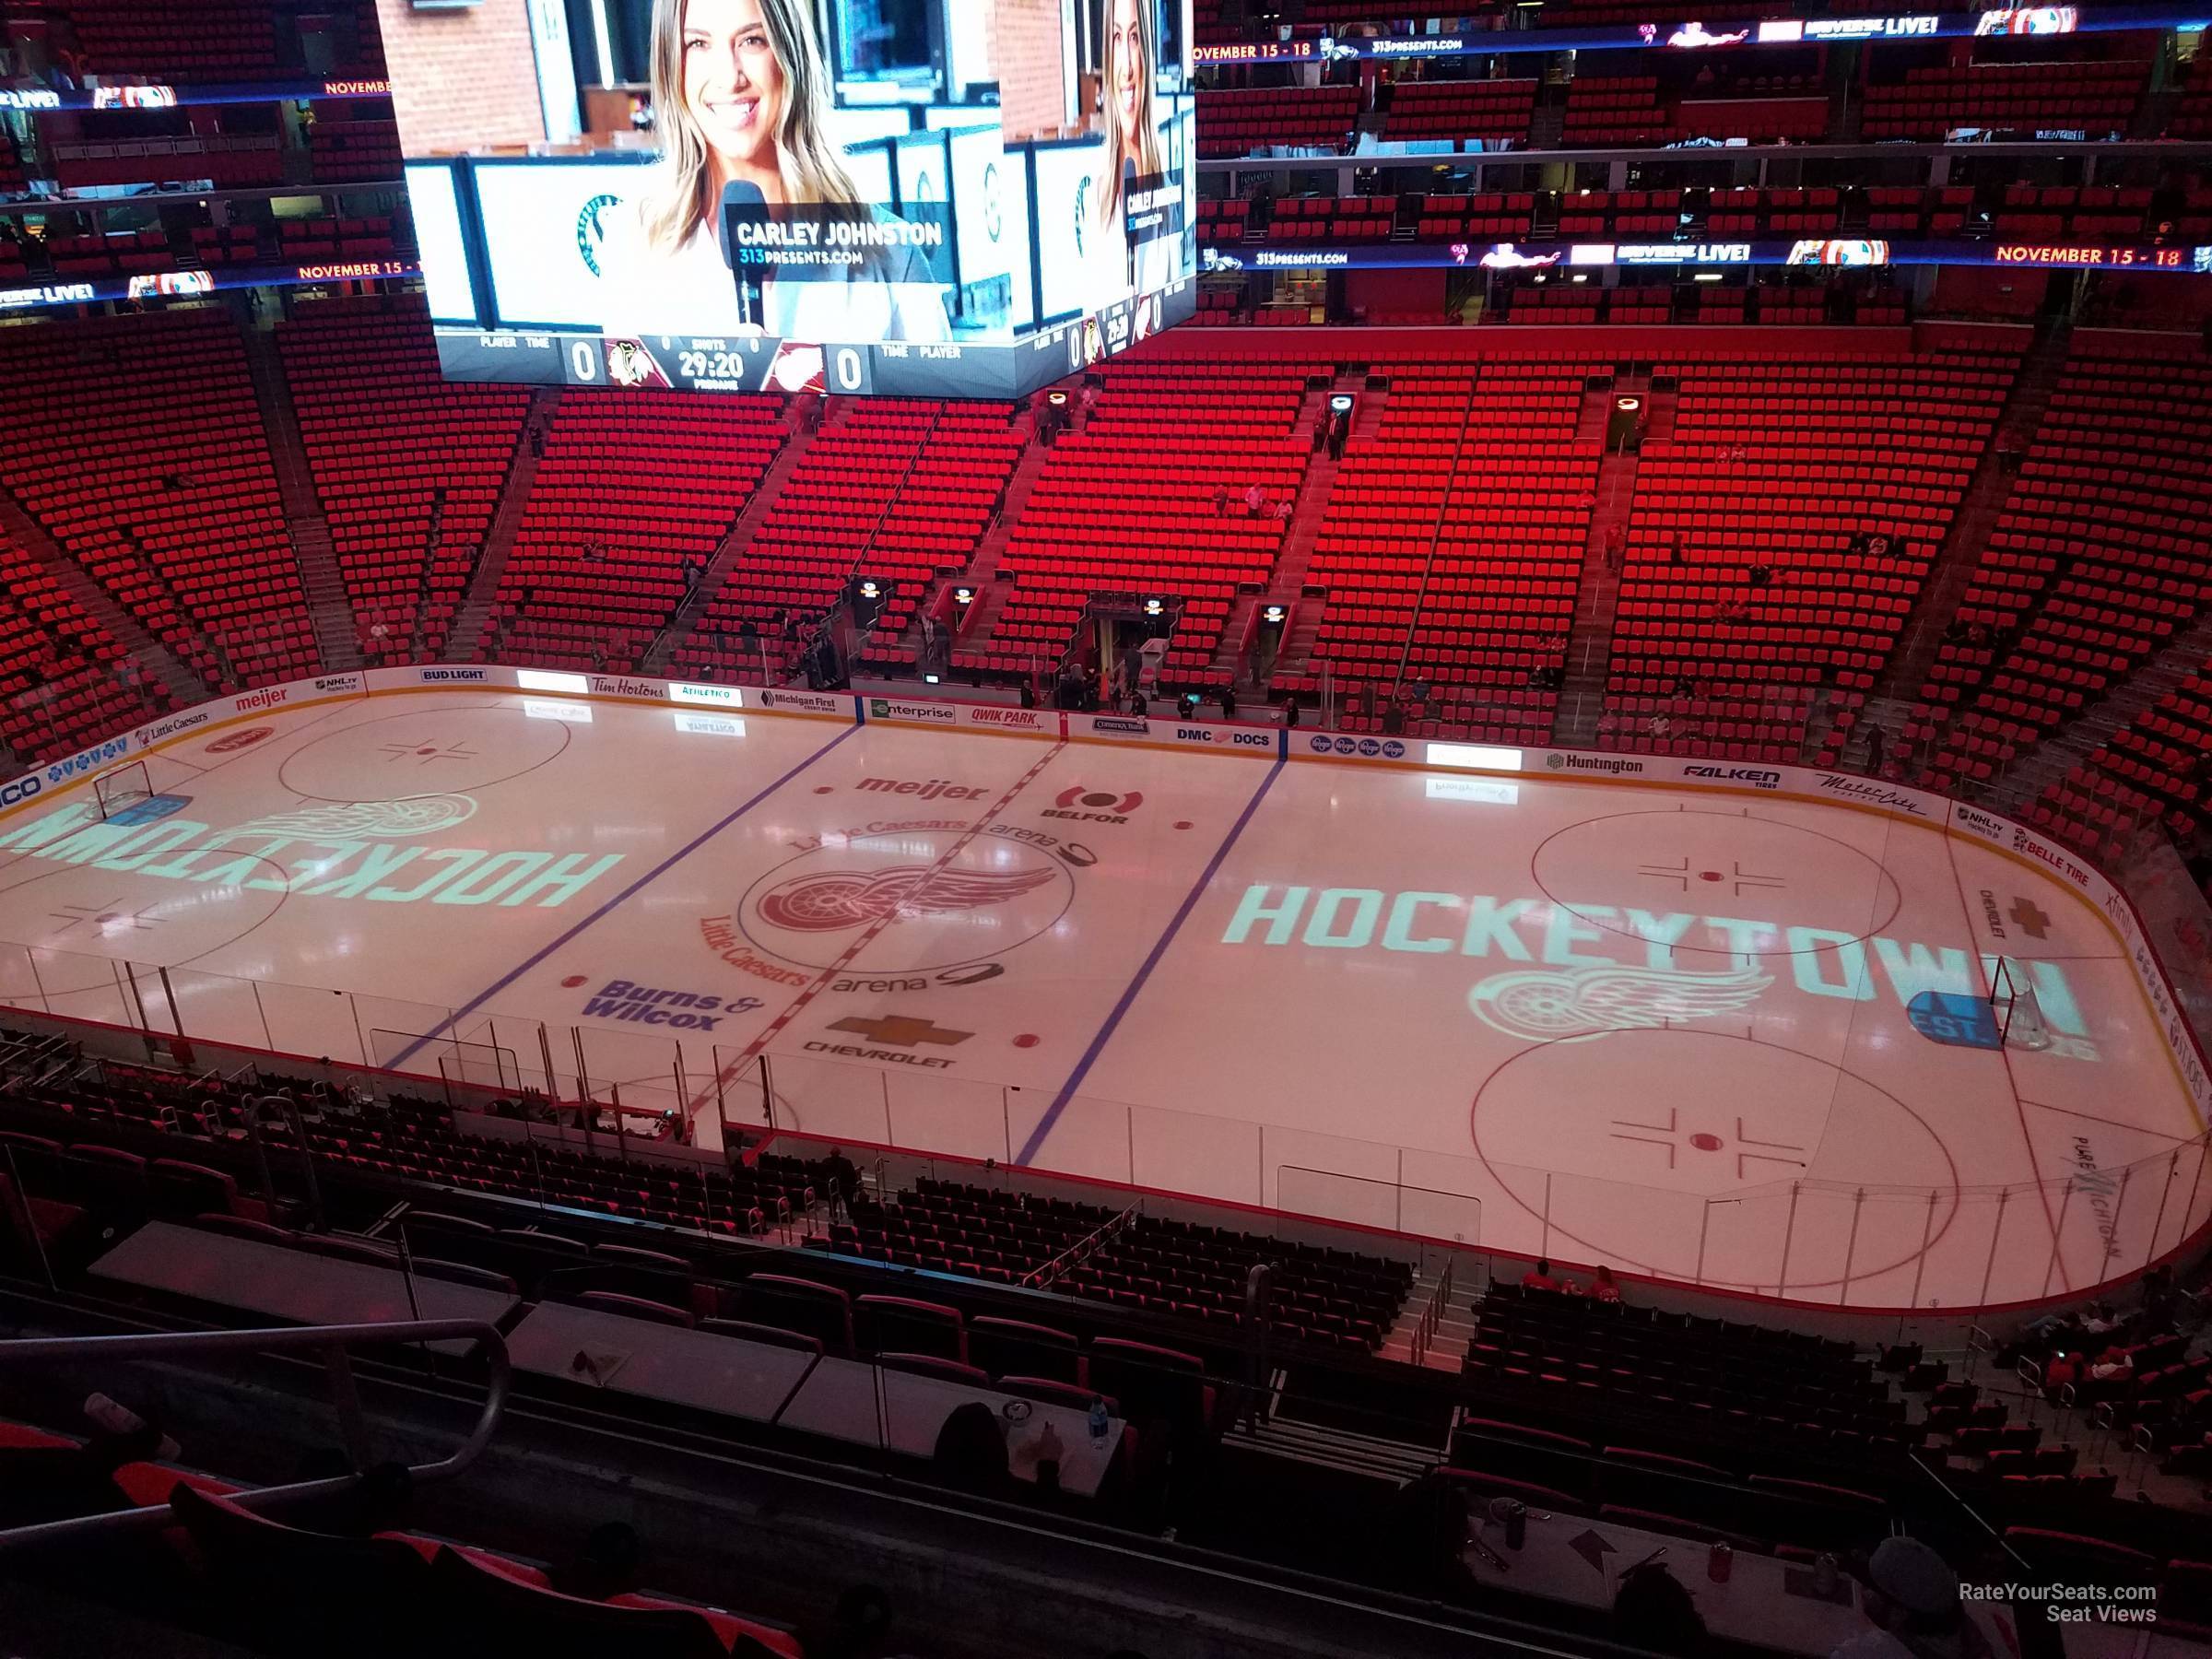 mezzanine 8, row 4 seat view  for hockey - little caesars arena